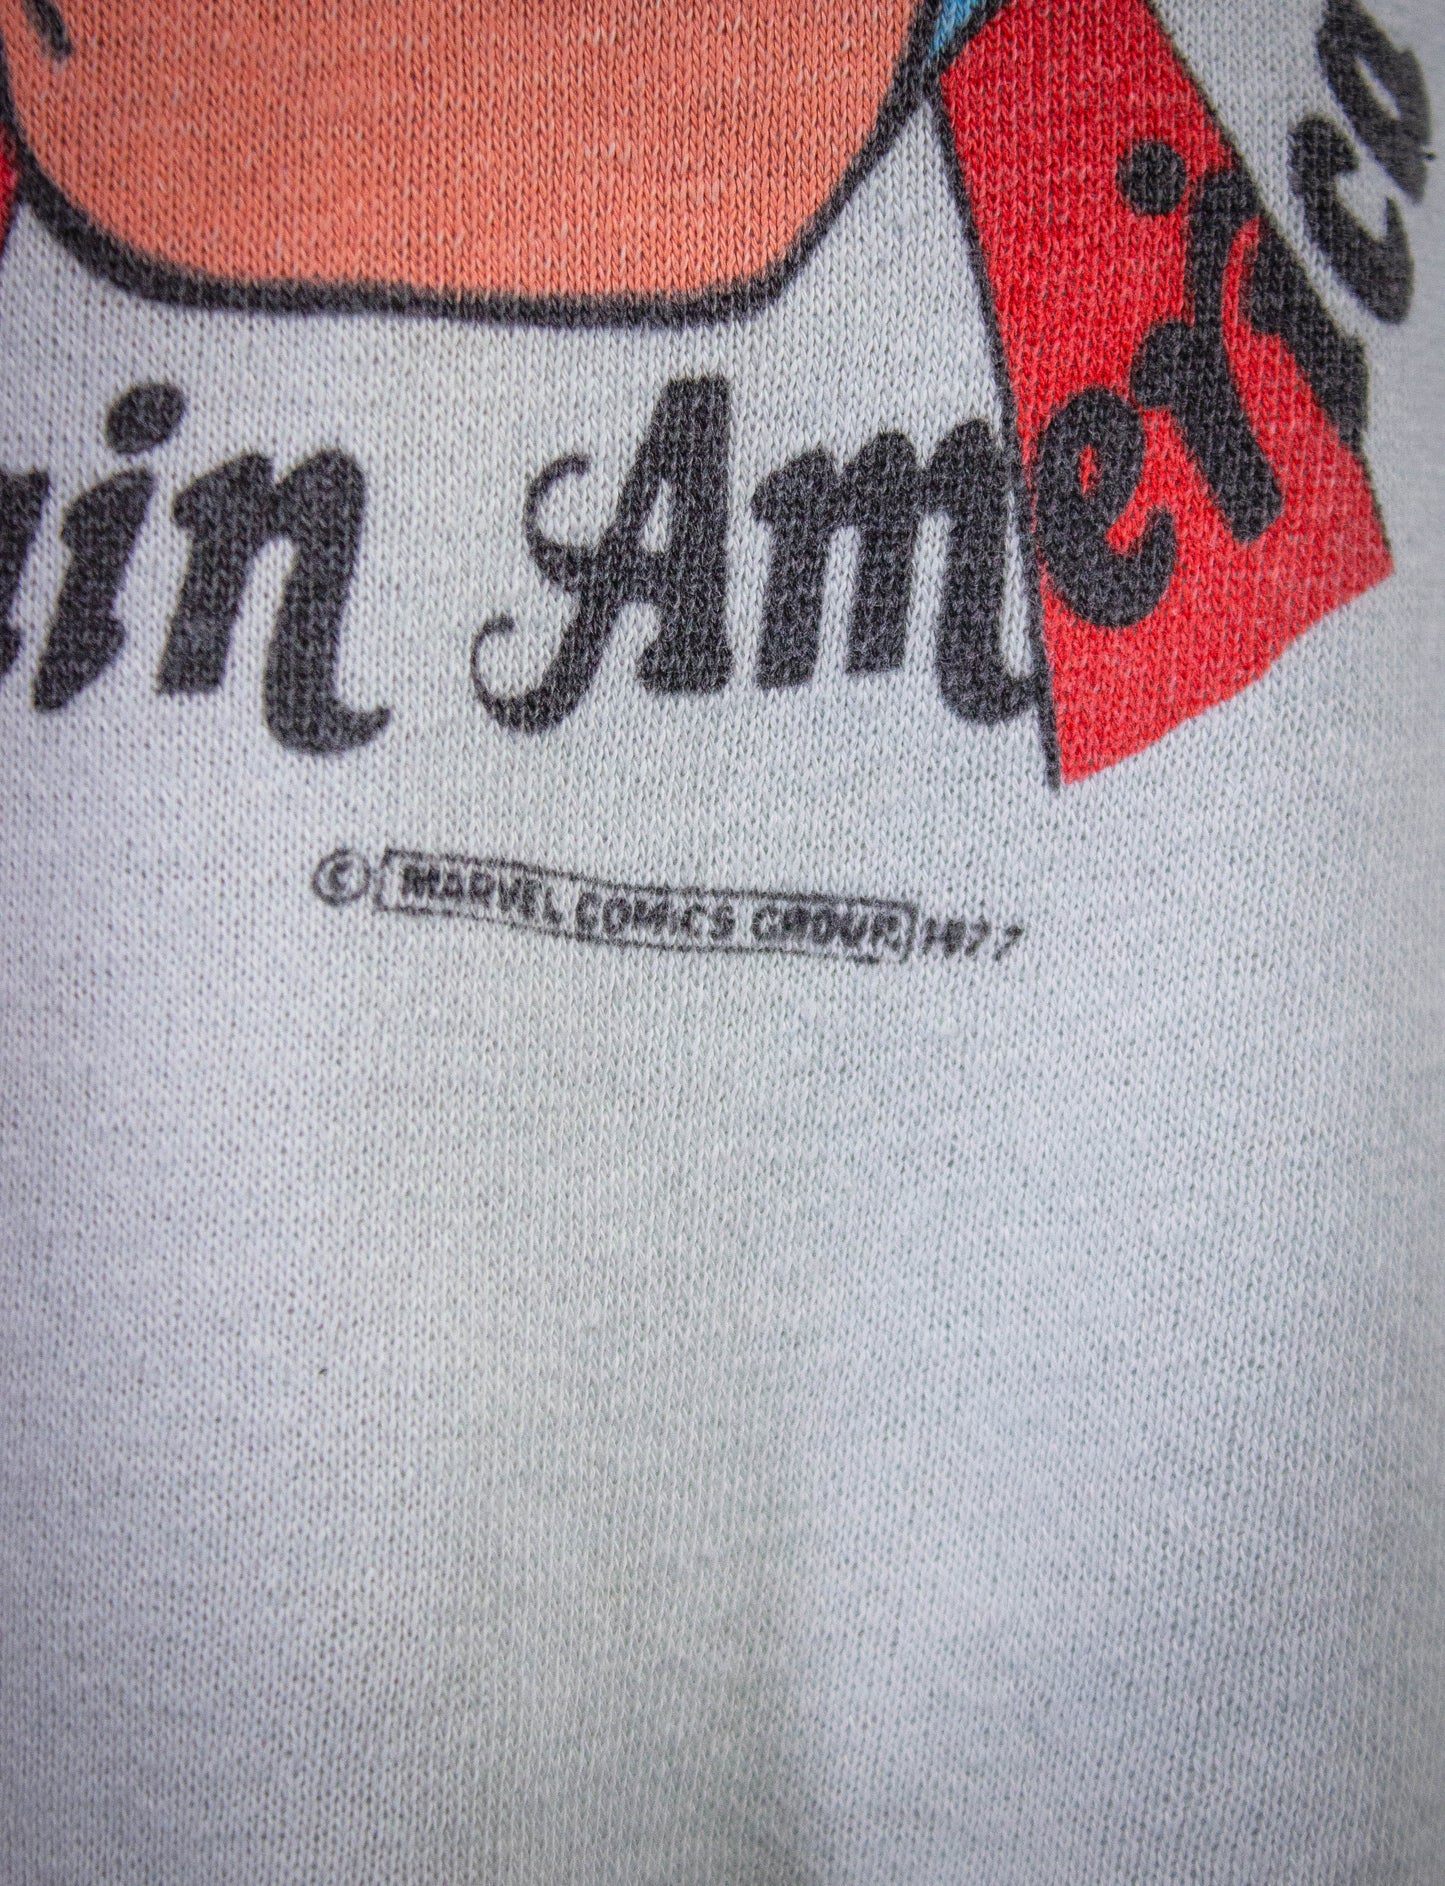 Vintage Captain America Graphic Crewneck Sweatshirt 1977 White XS